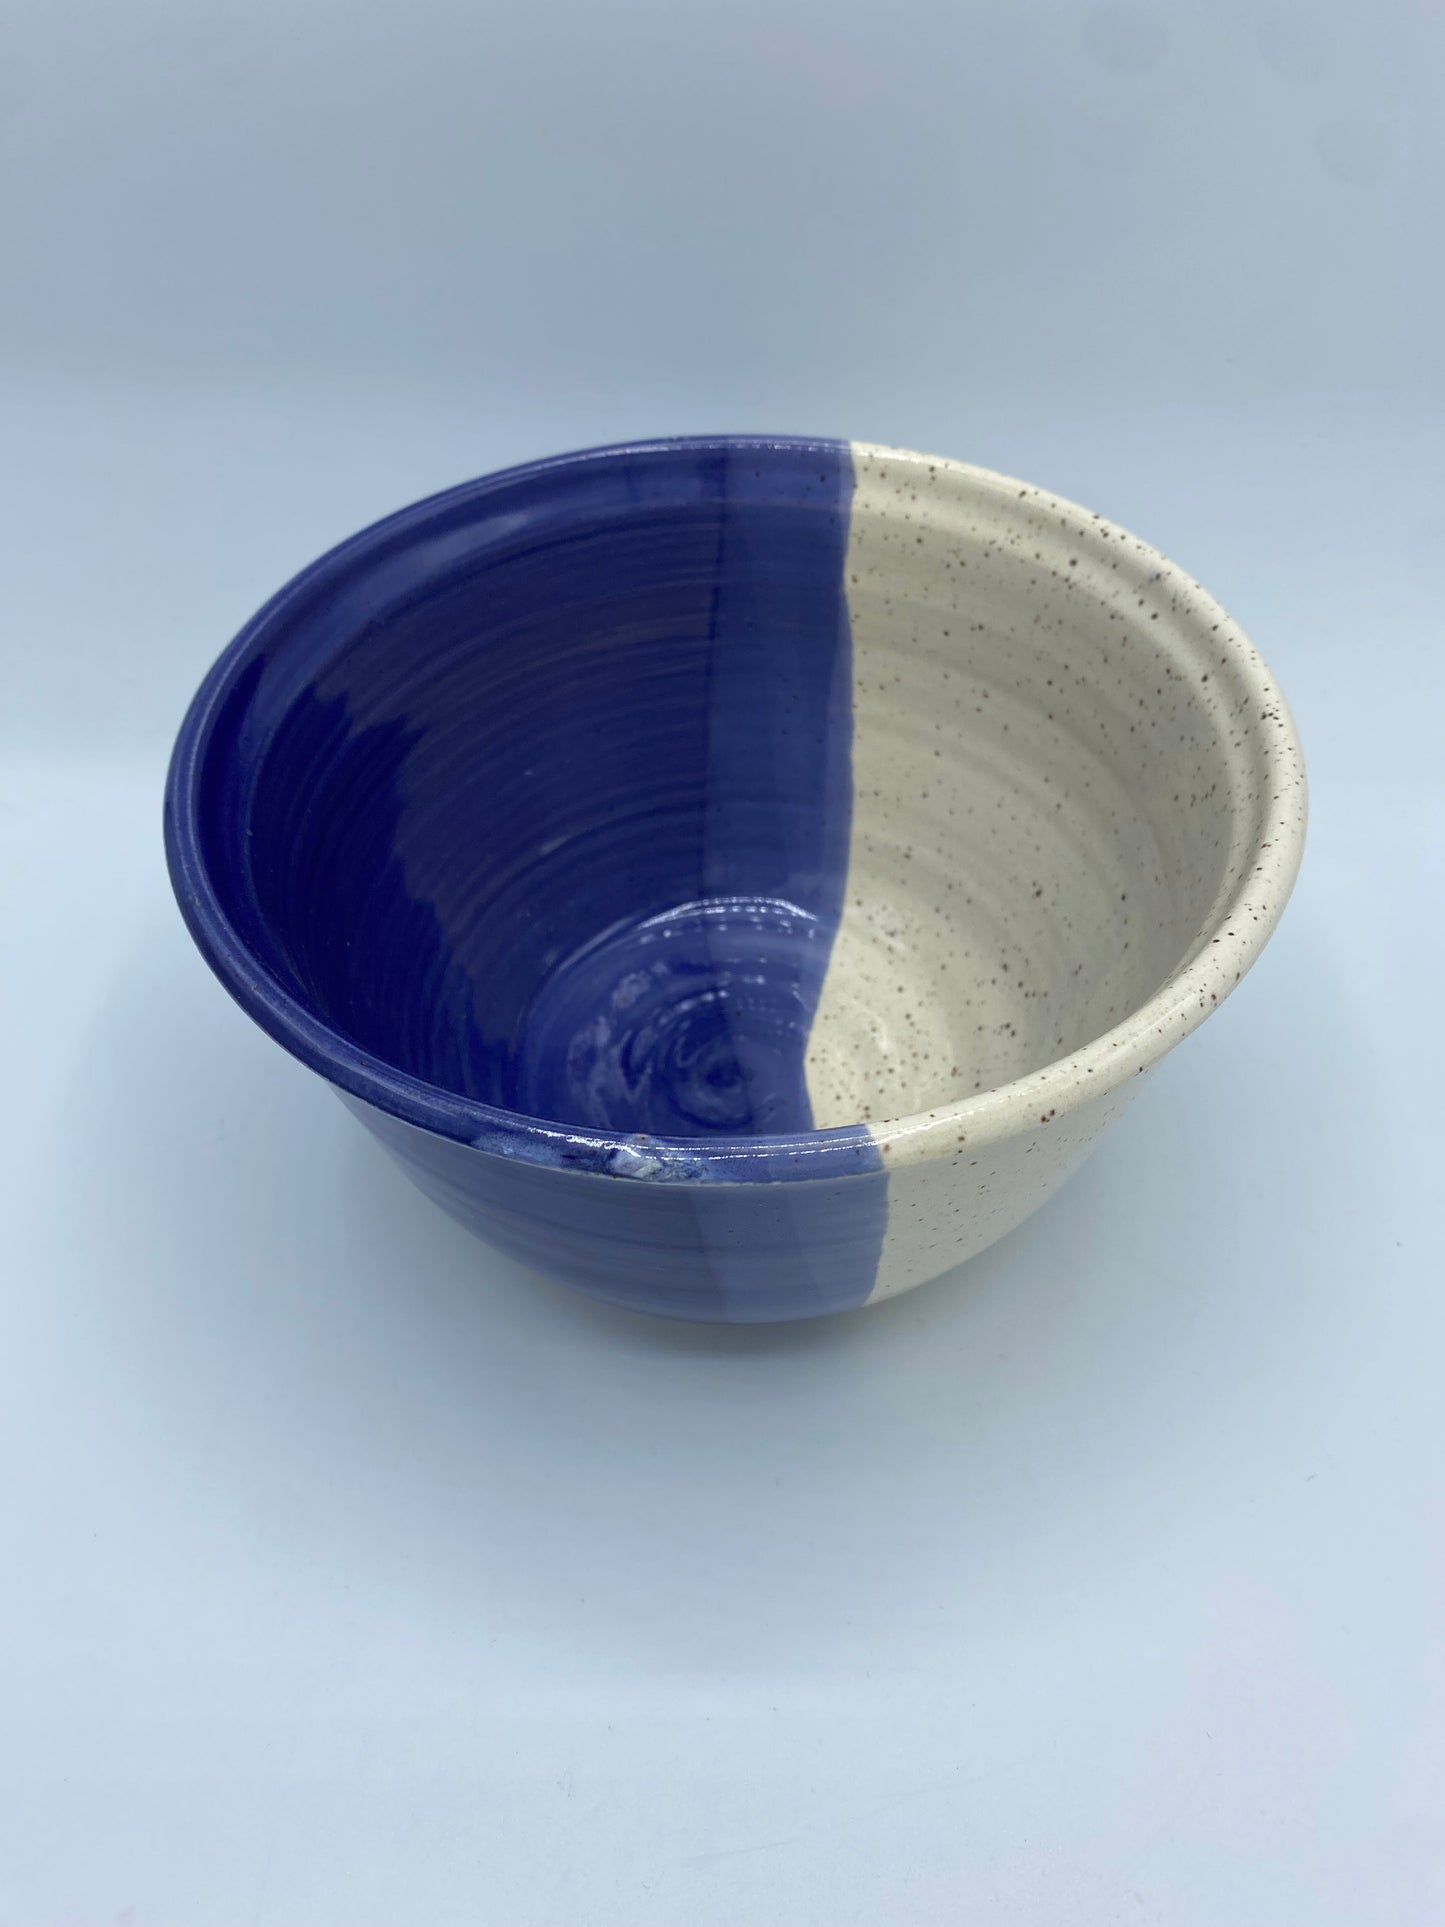 The Big Blue Bowl